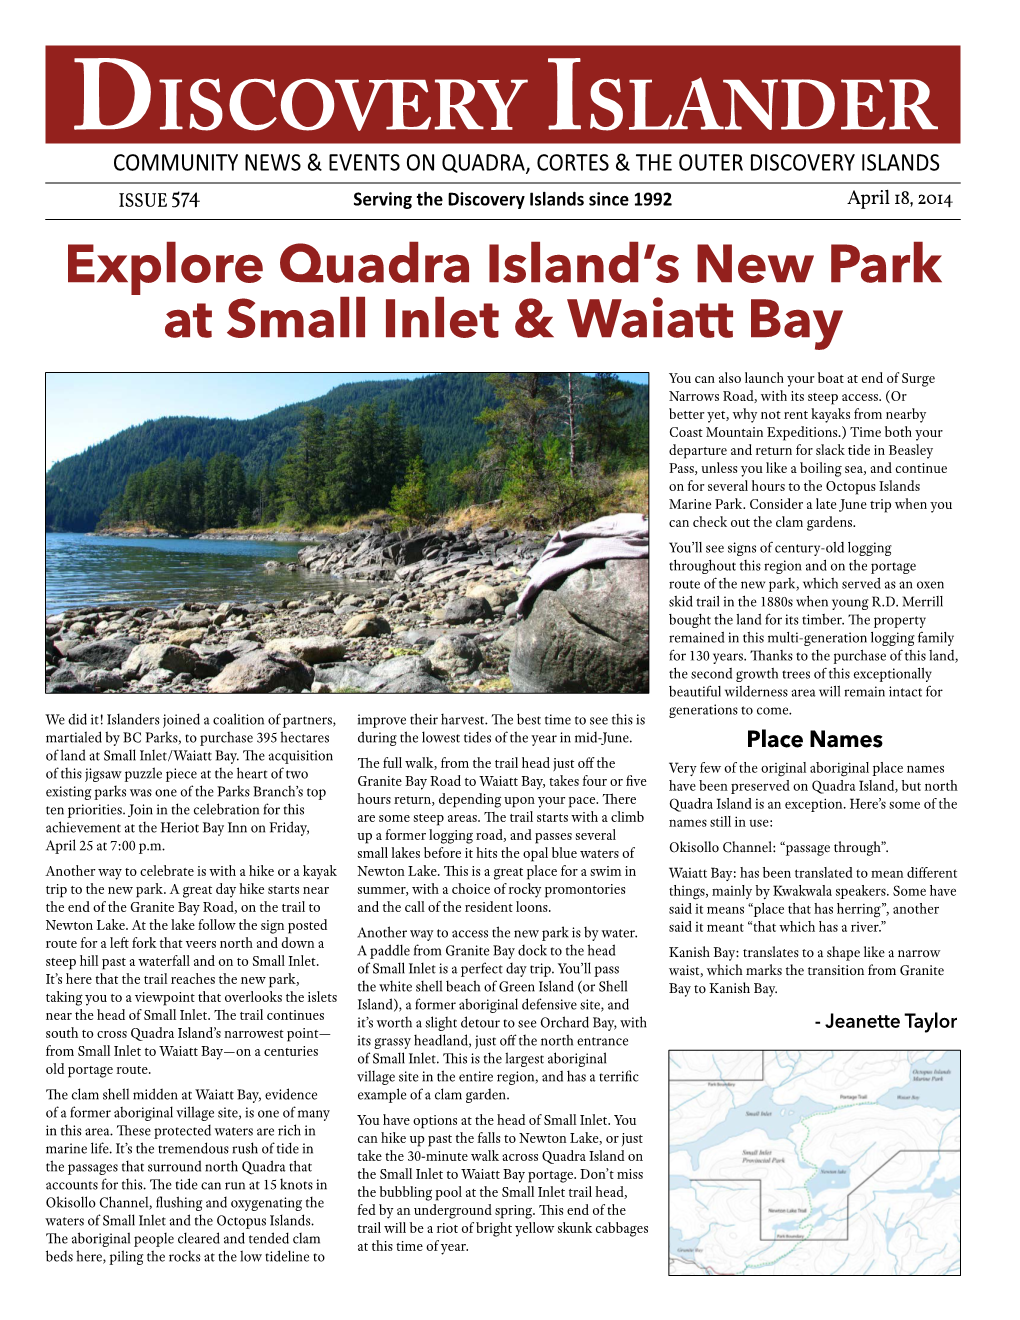 Explore Quadra Island's New Park at Small Inlet & Waiatt